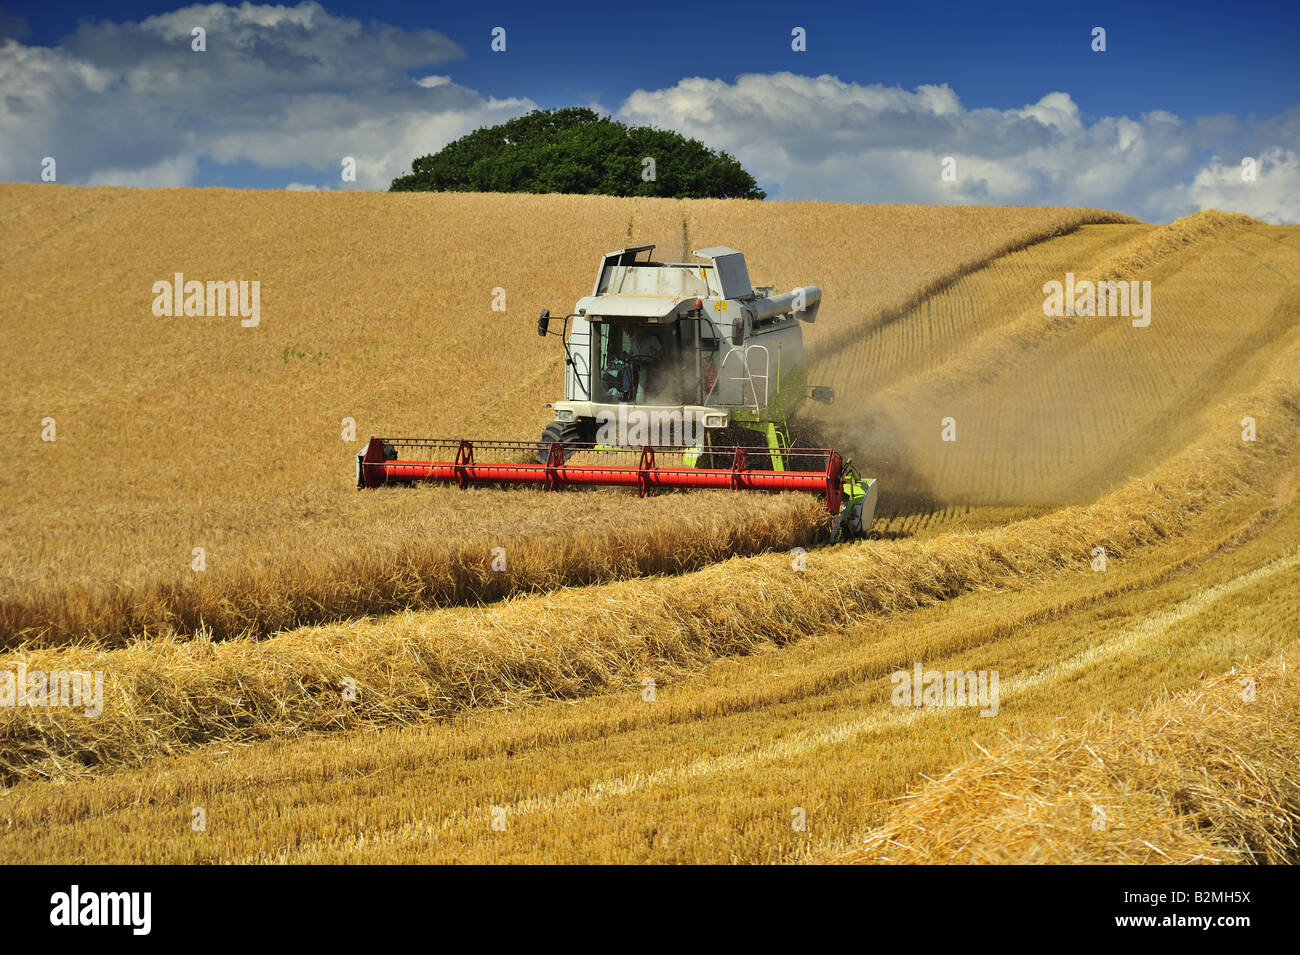 Combine harvesting in England Stock Photo